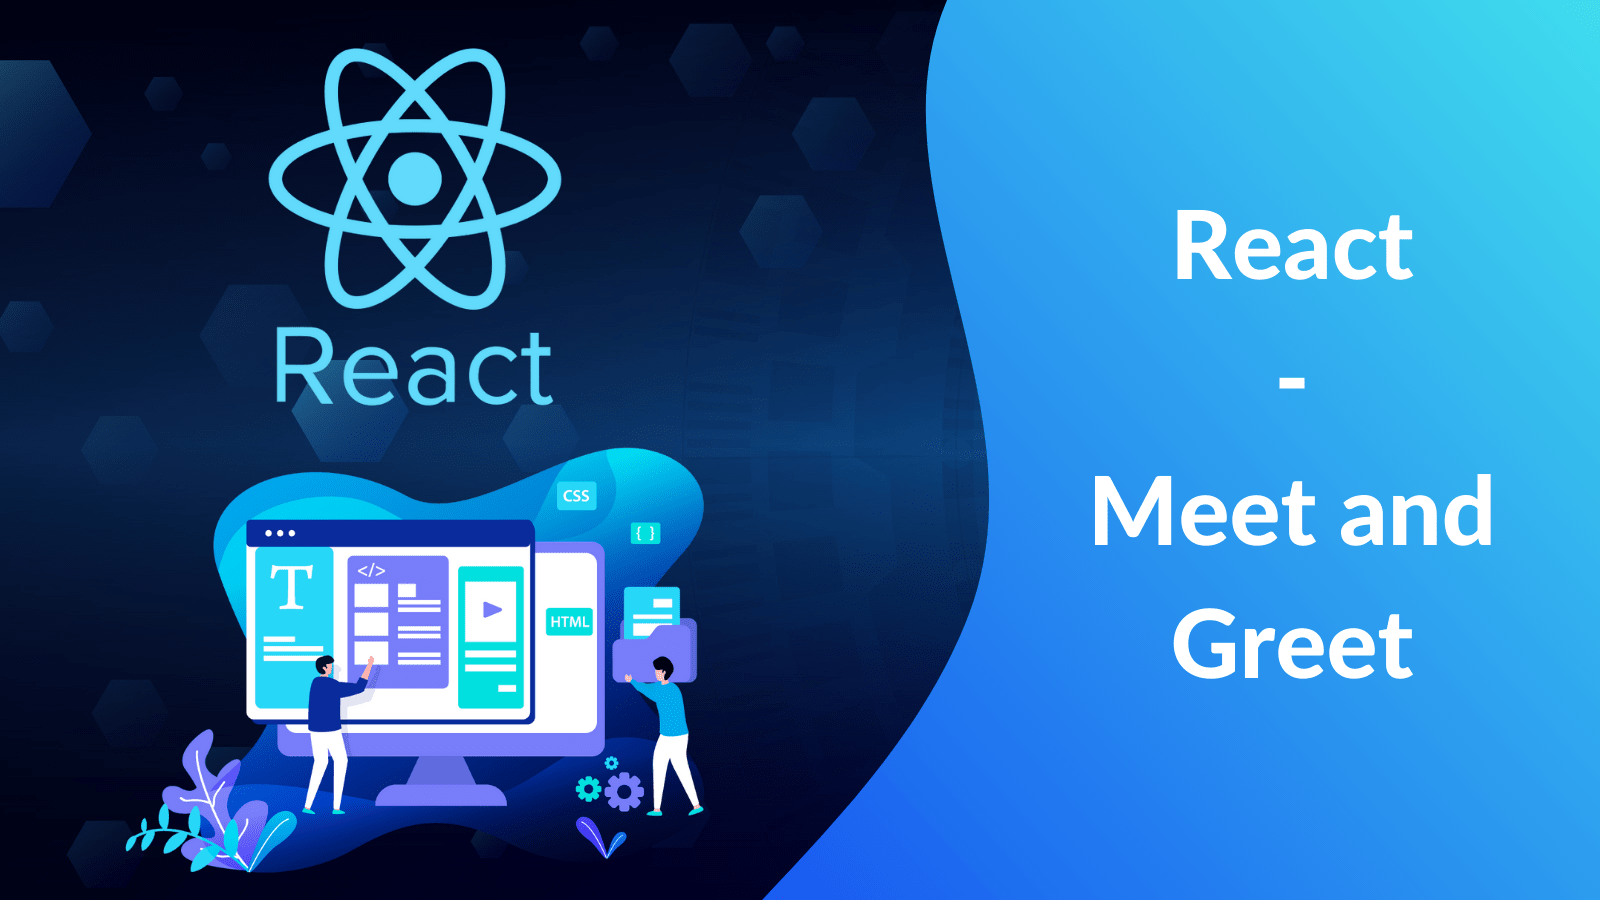 React - Meet and Greet